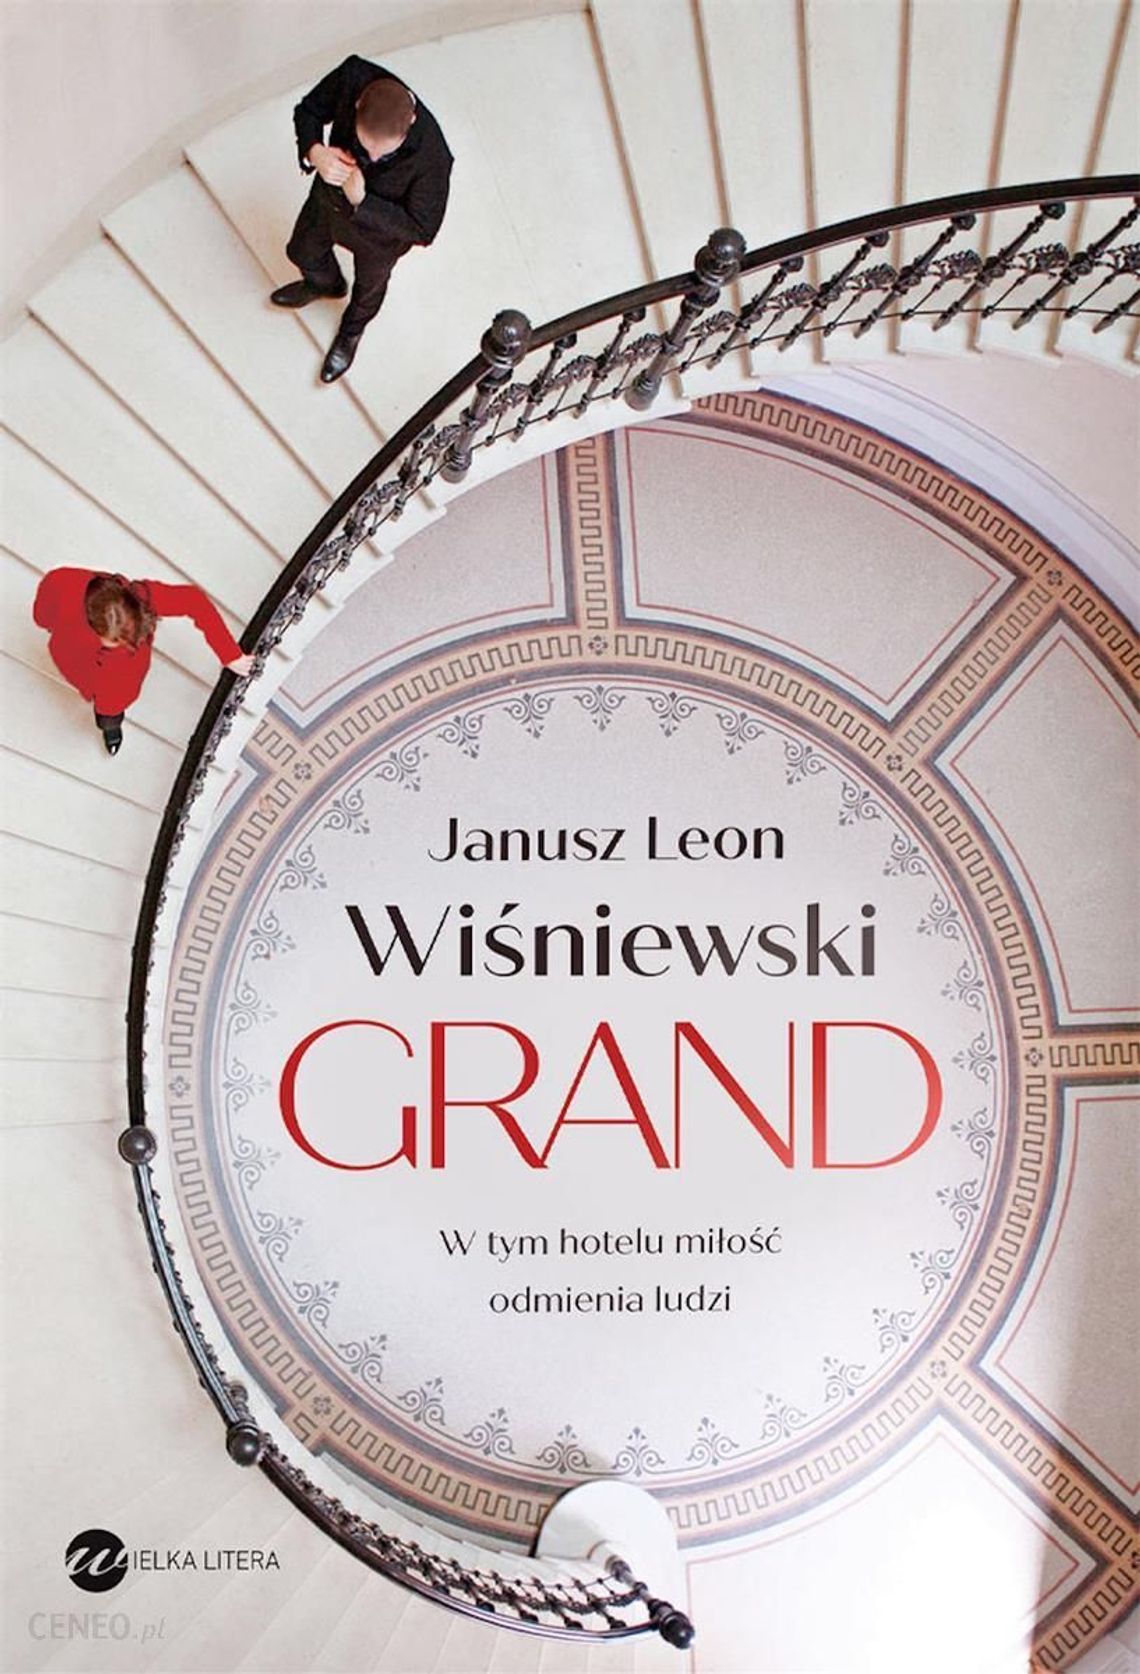 "Grand" - Janusz Leon Wiśniewski